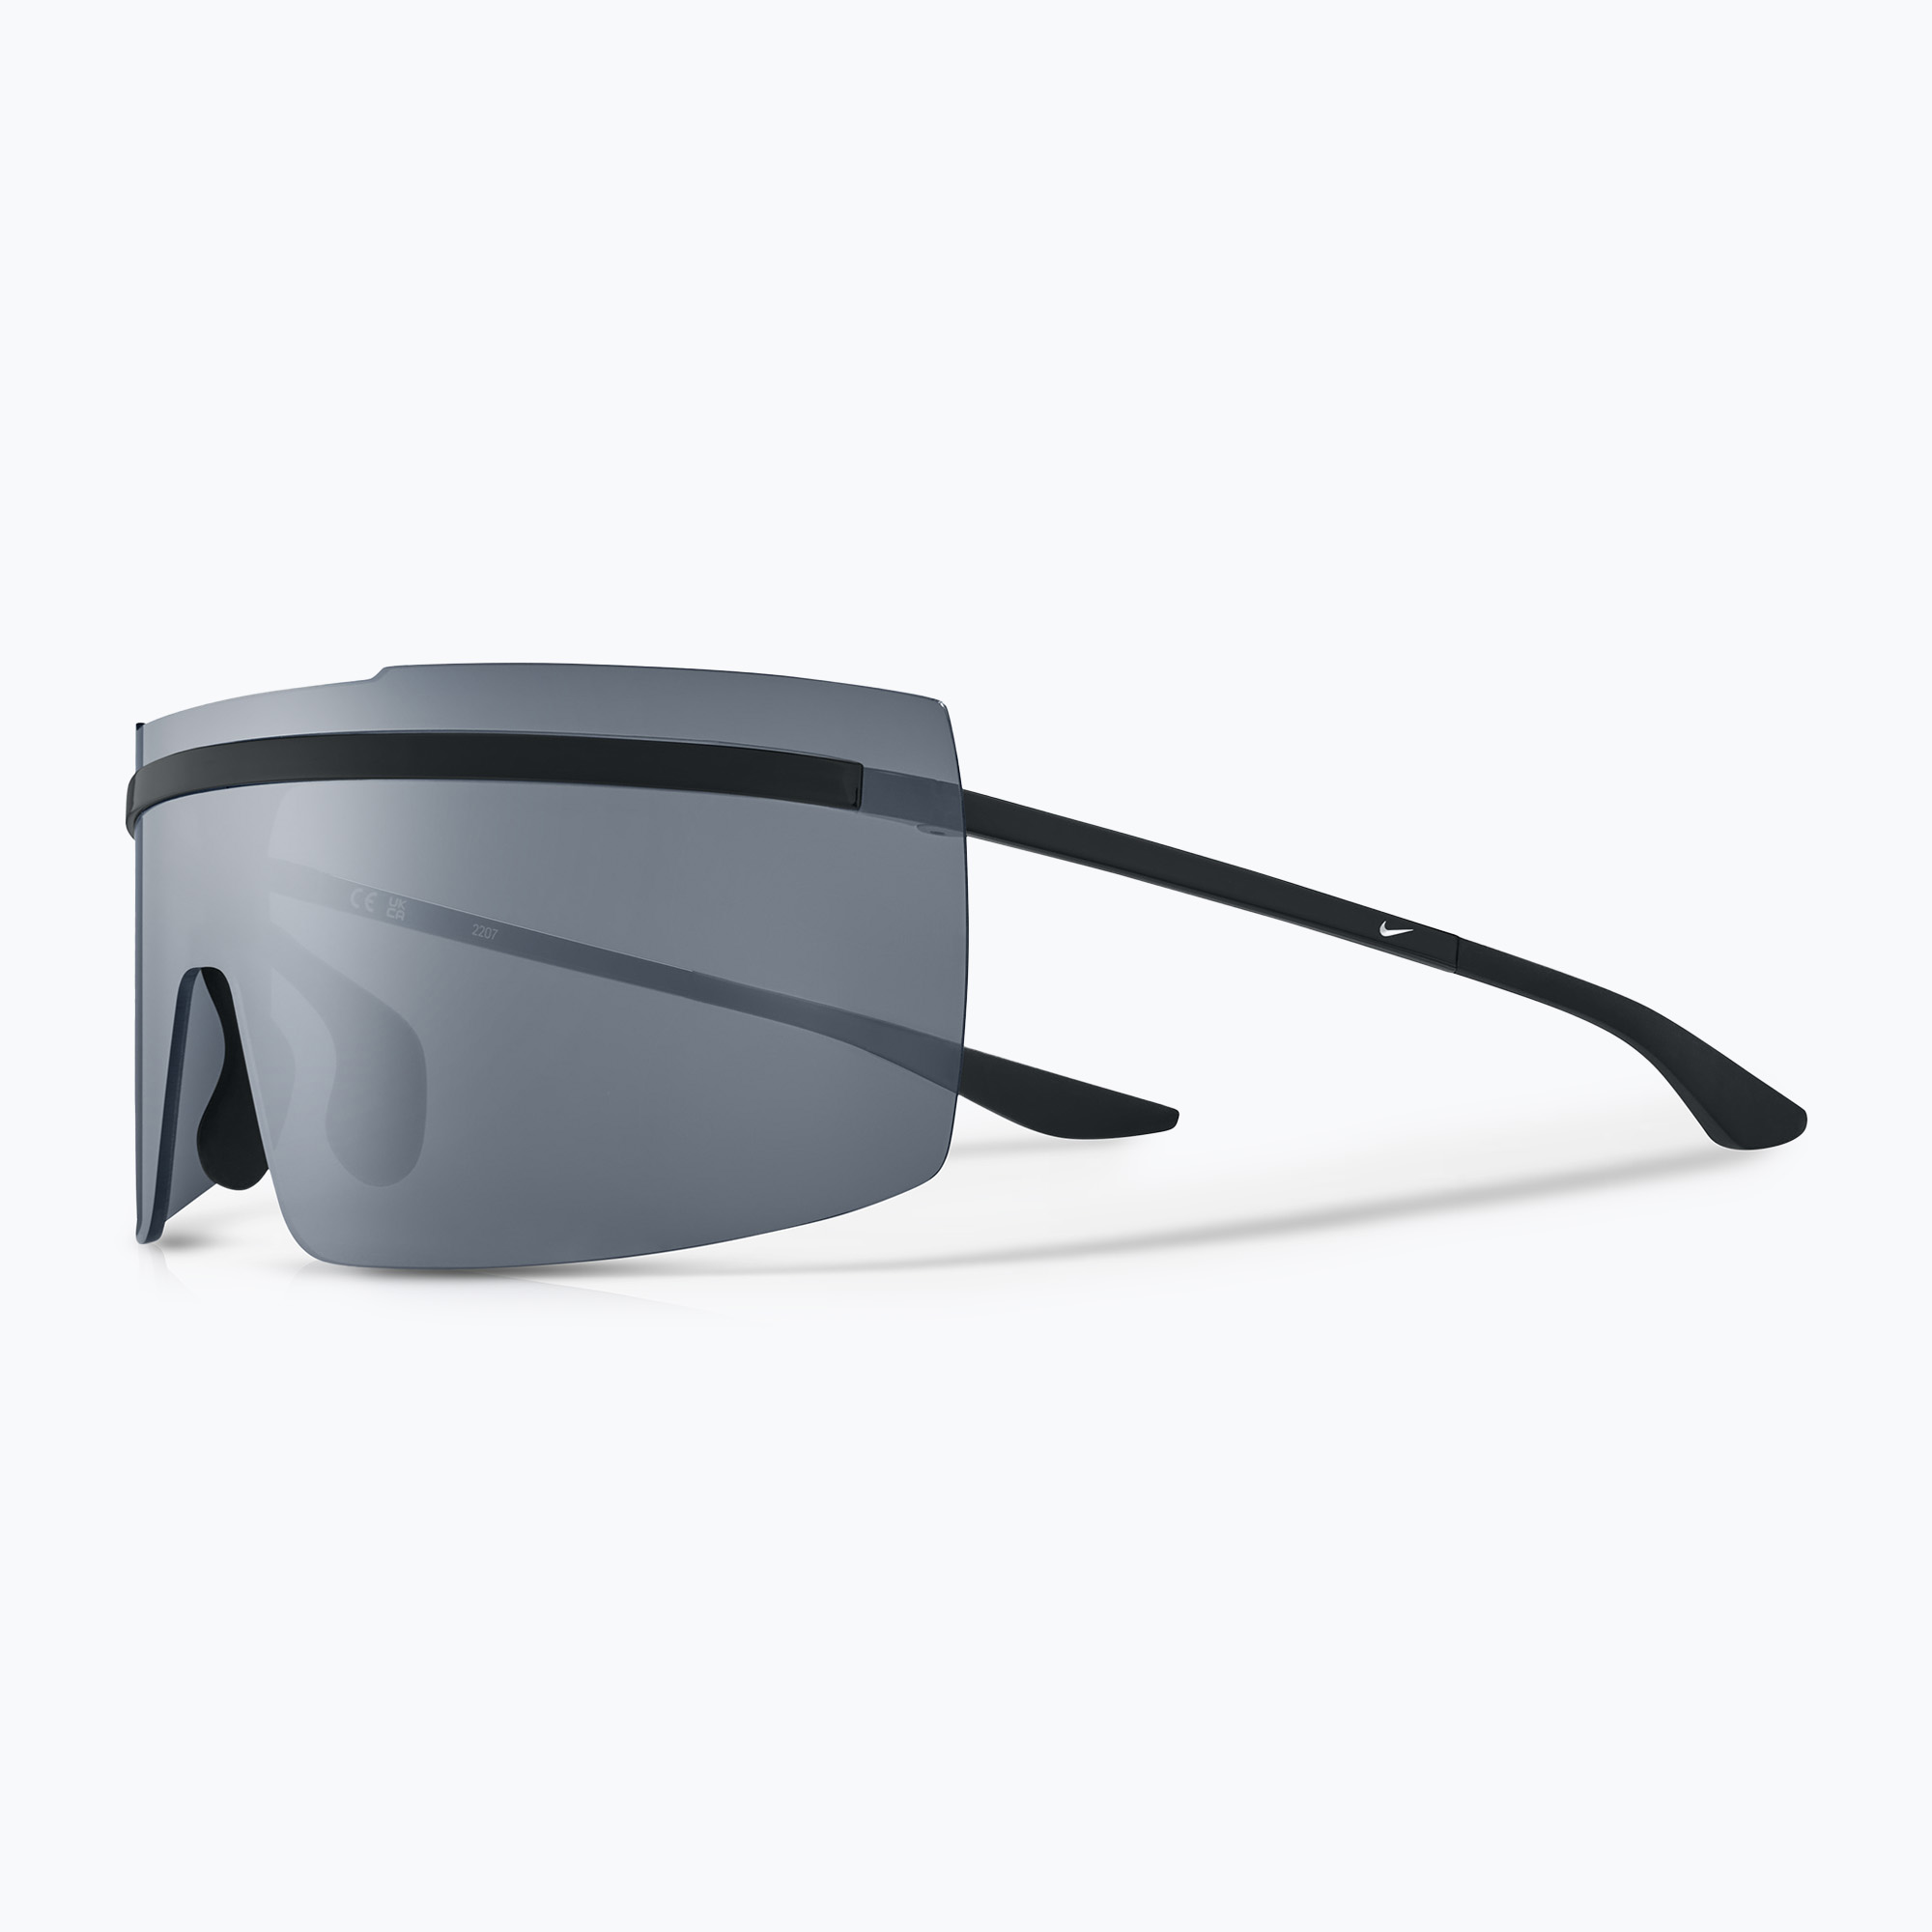 Слънчеви очила Nike Echo Shield черни/сребърни светкавици